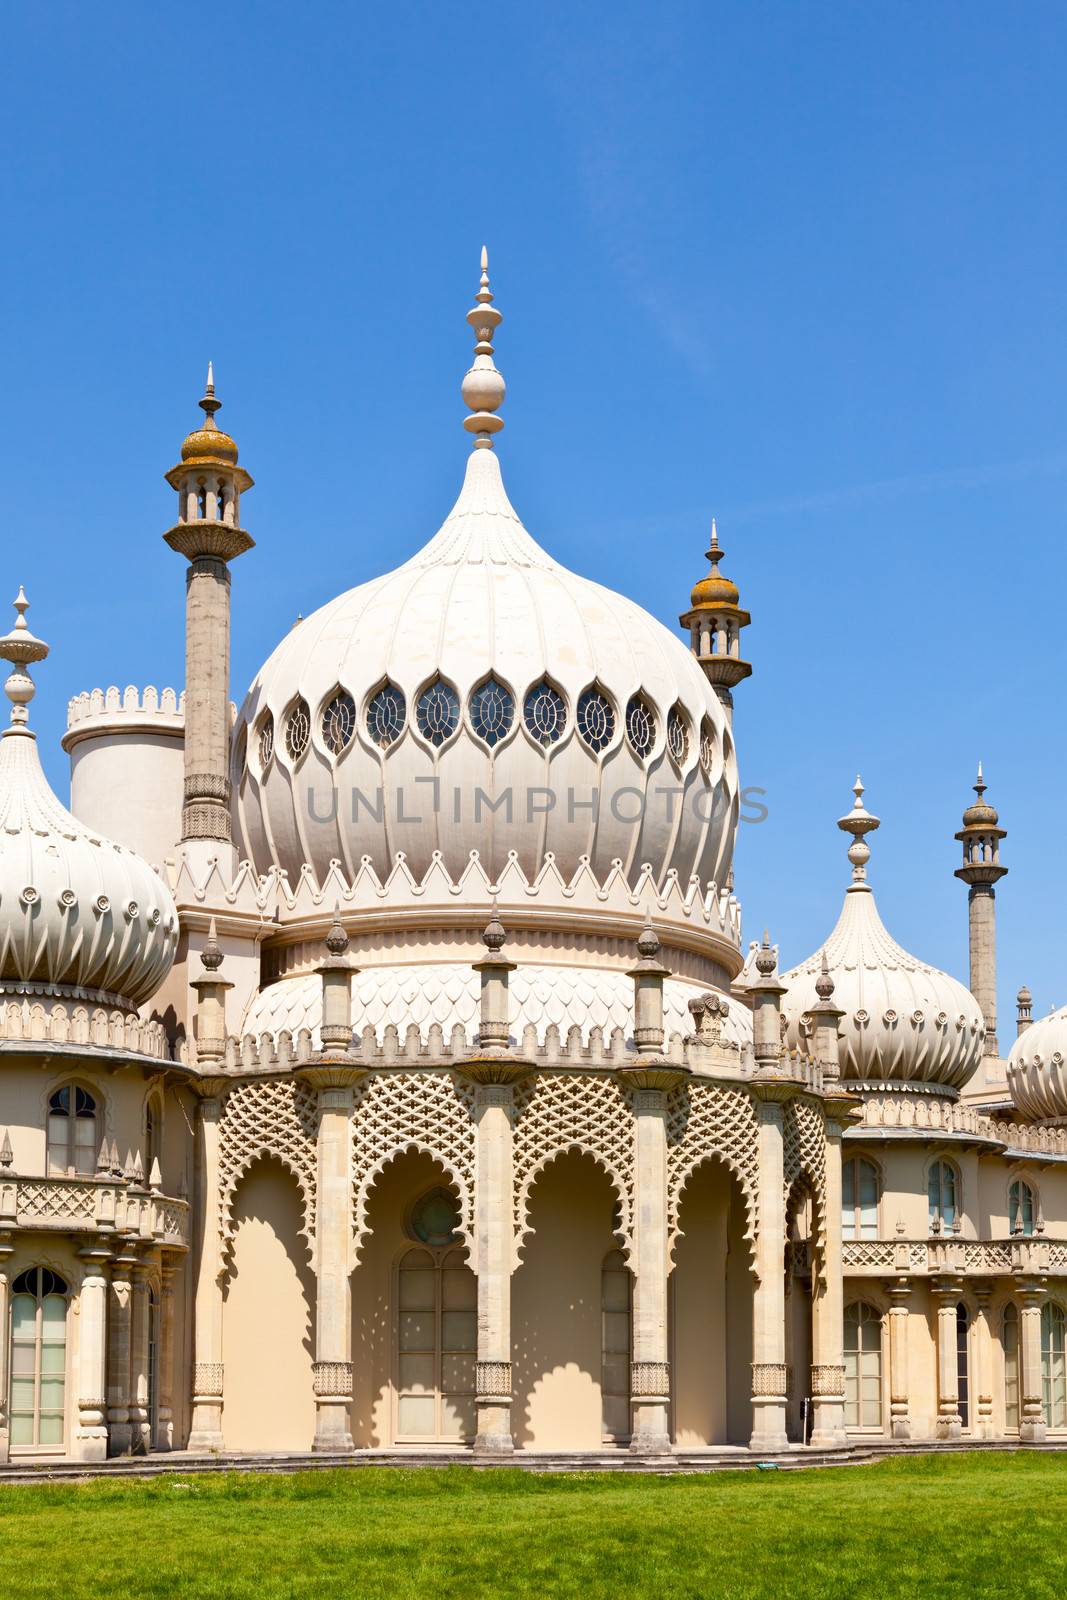 Royal Pavilion in Brighton, England